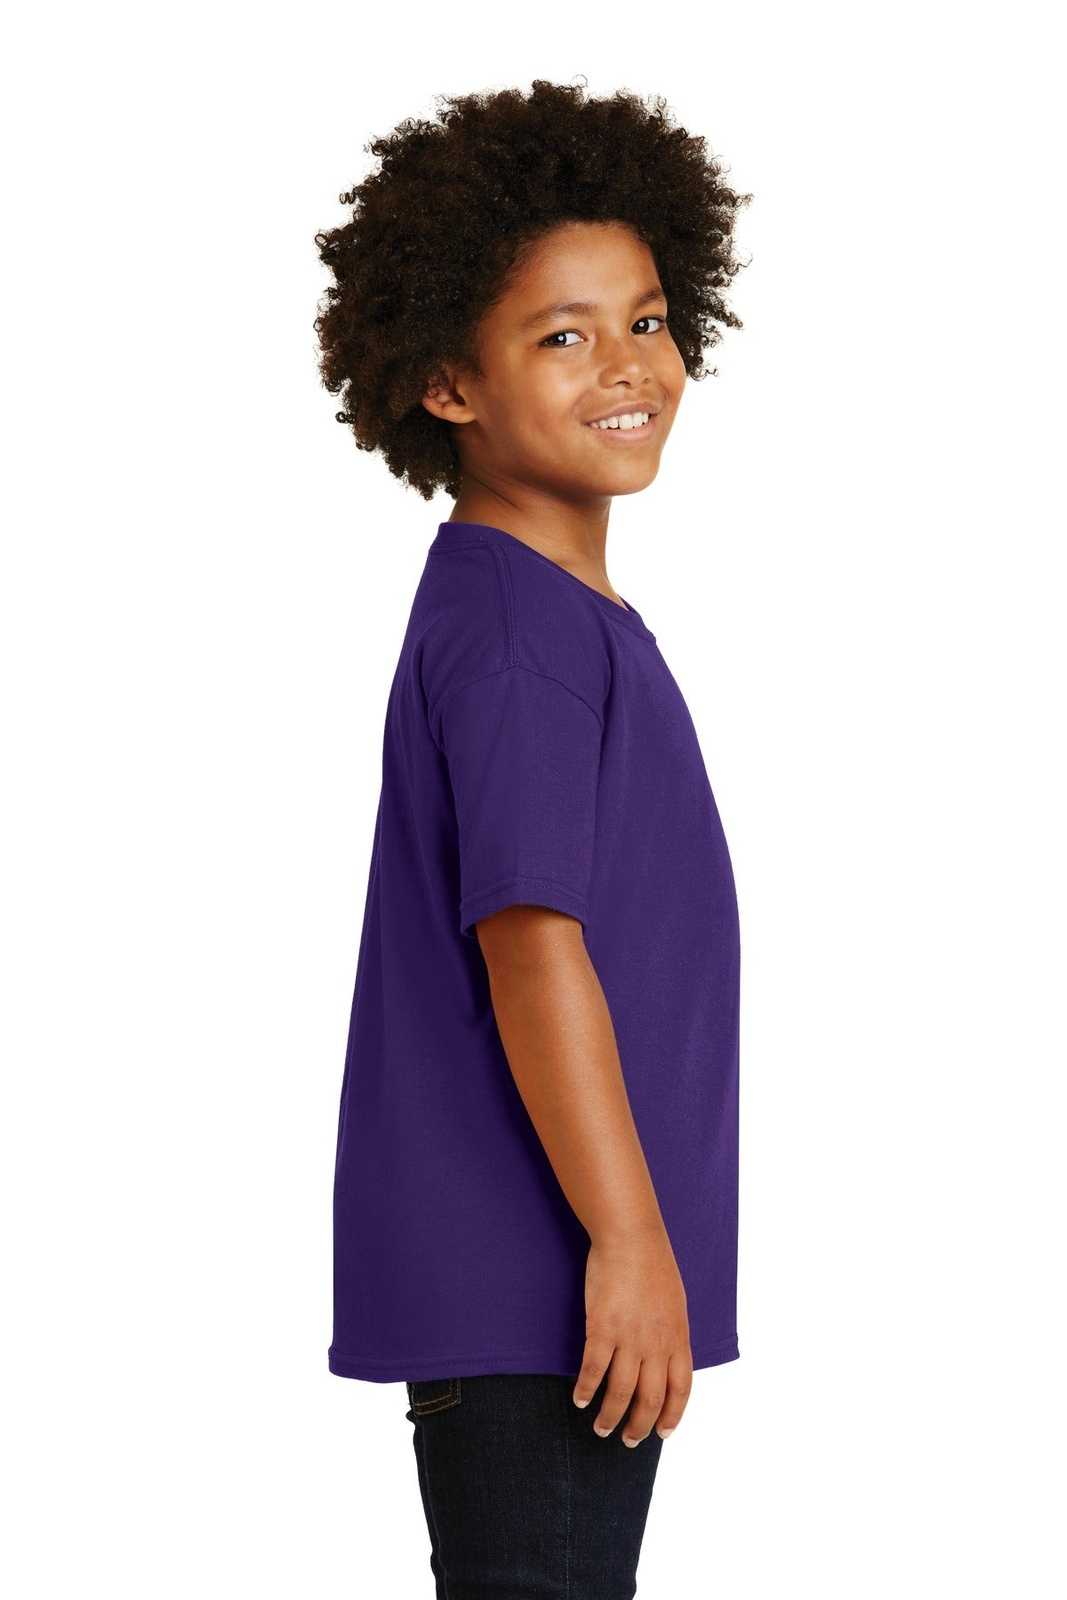 Gildan 5000B Youth Heavy Cotton 100% Cotton T-Shirt - Purple - HIT a Double